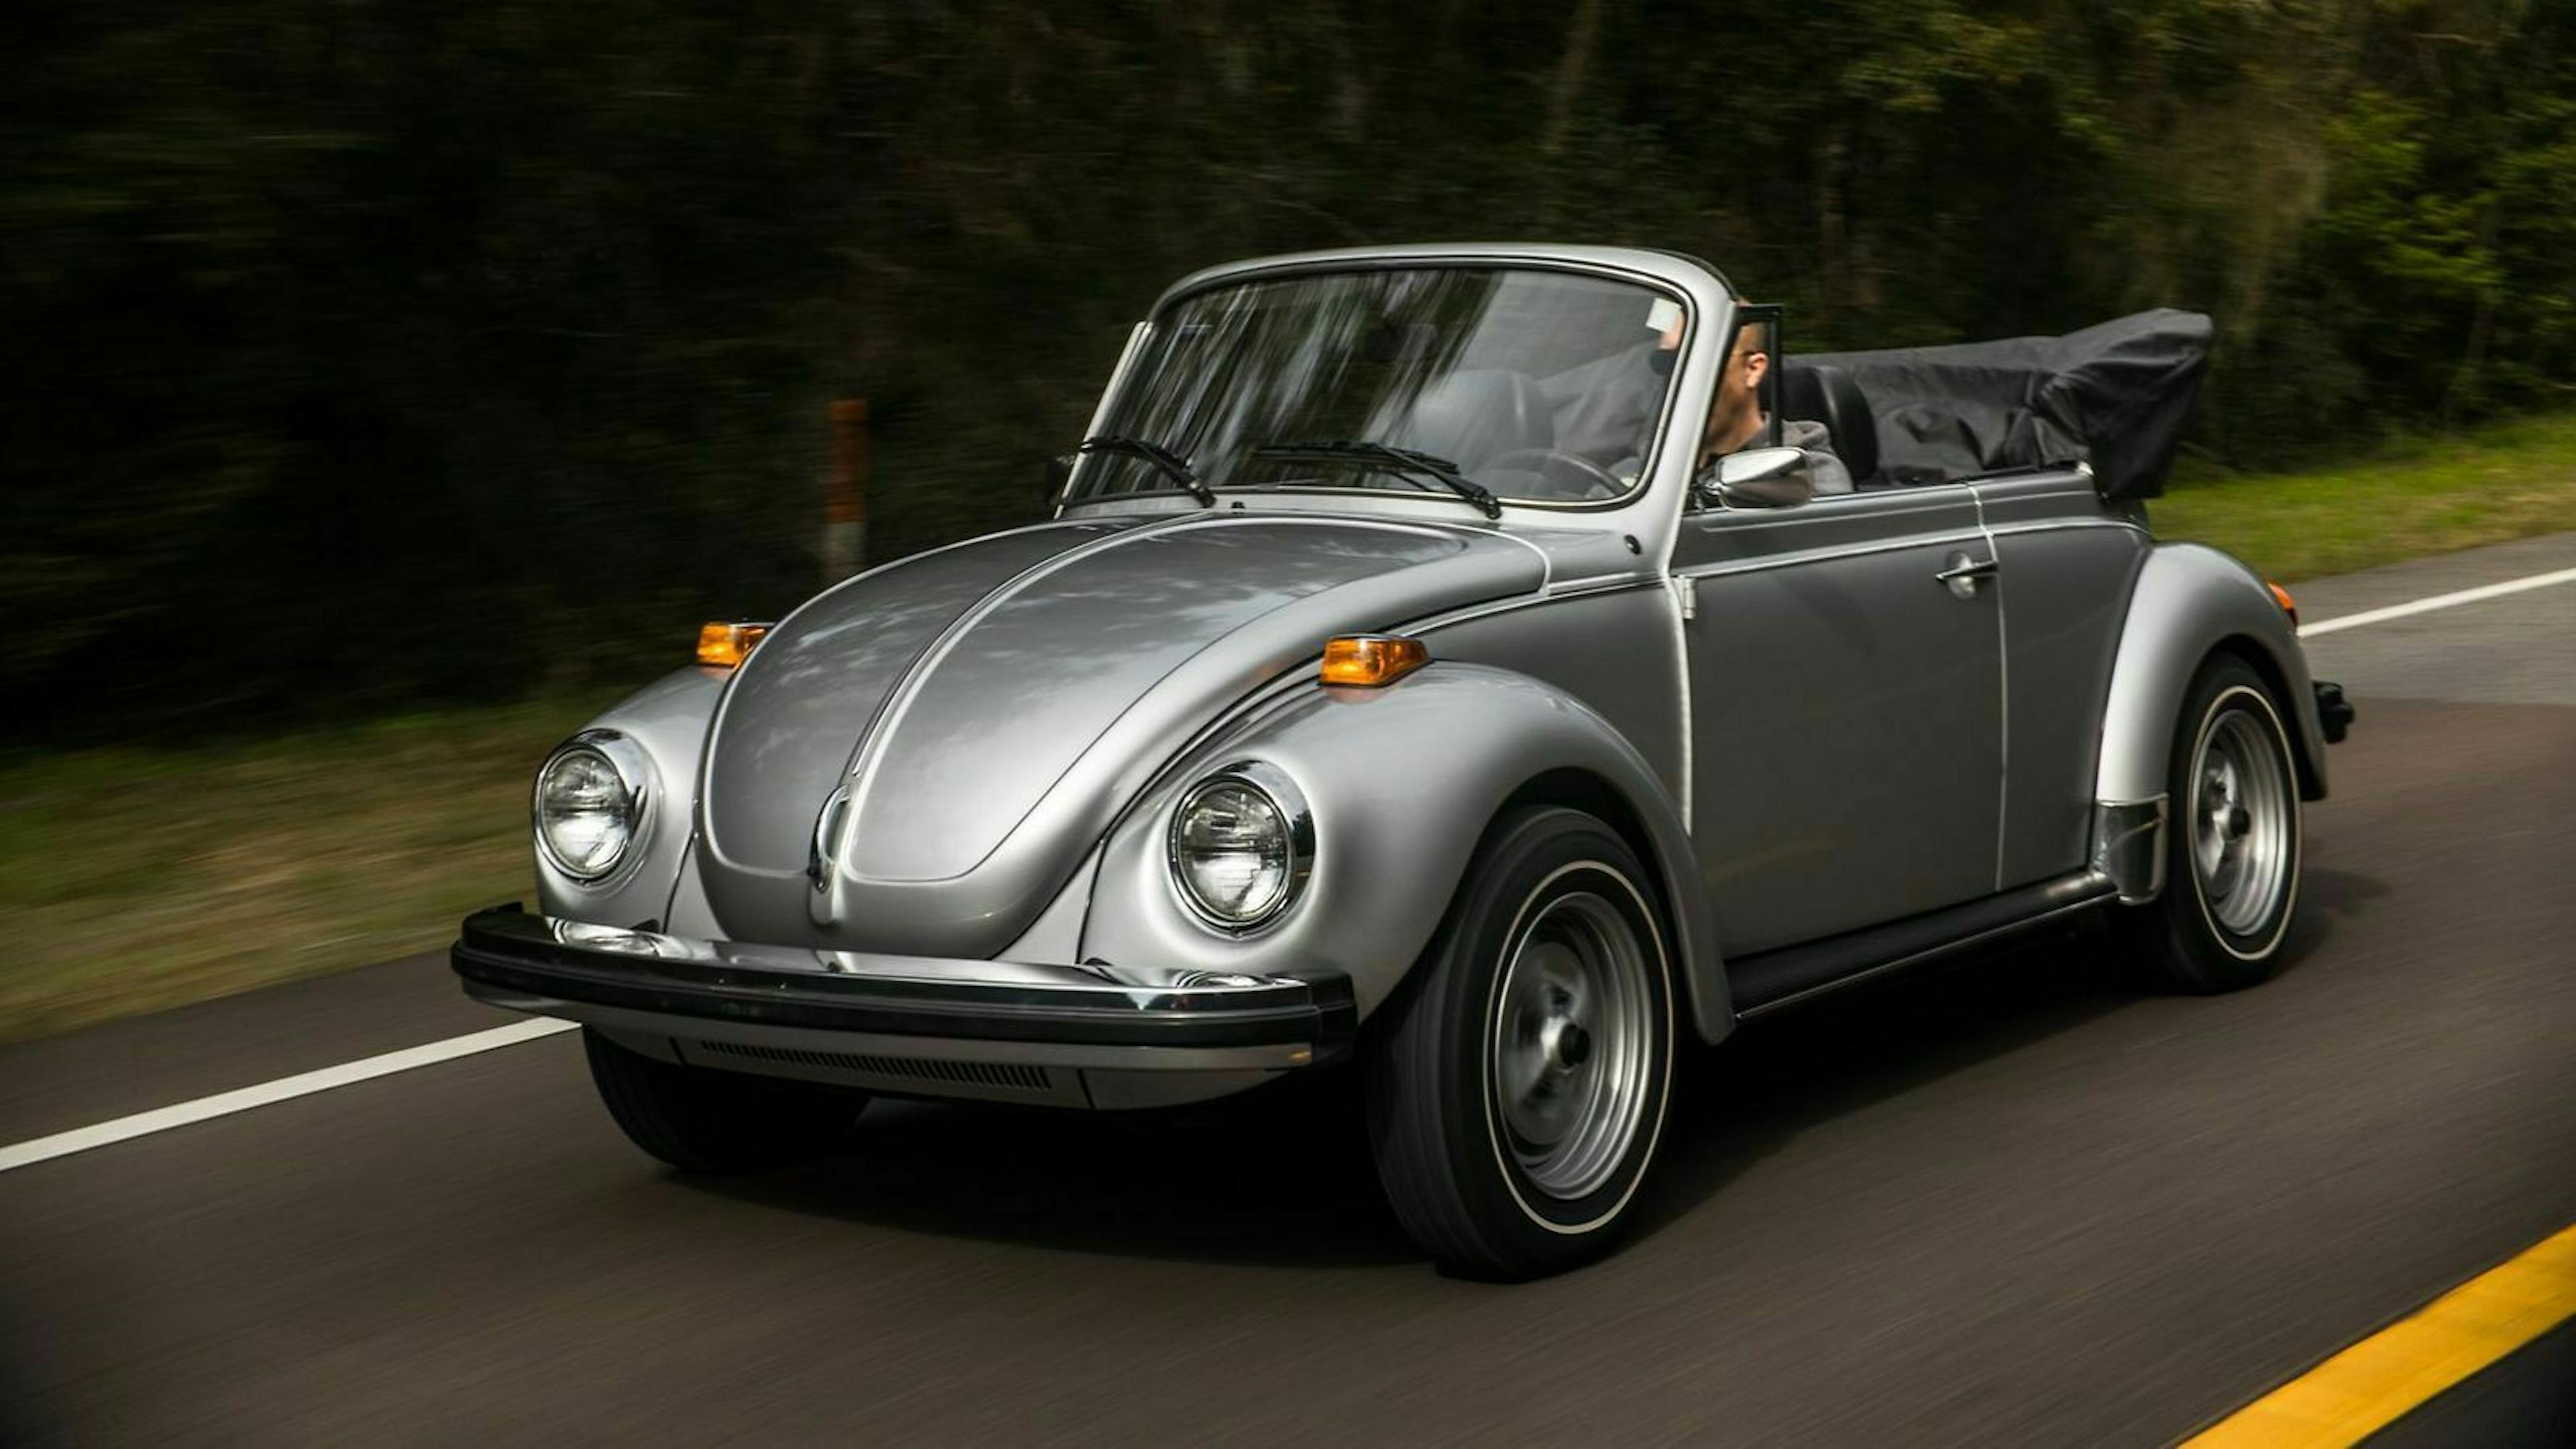 Zu sehen ist der VW Super Beetle Convertible, fahrend